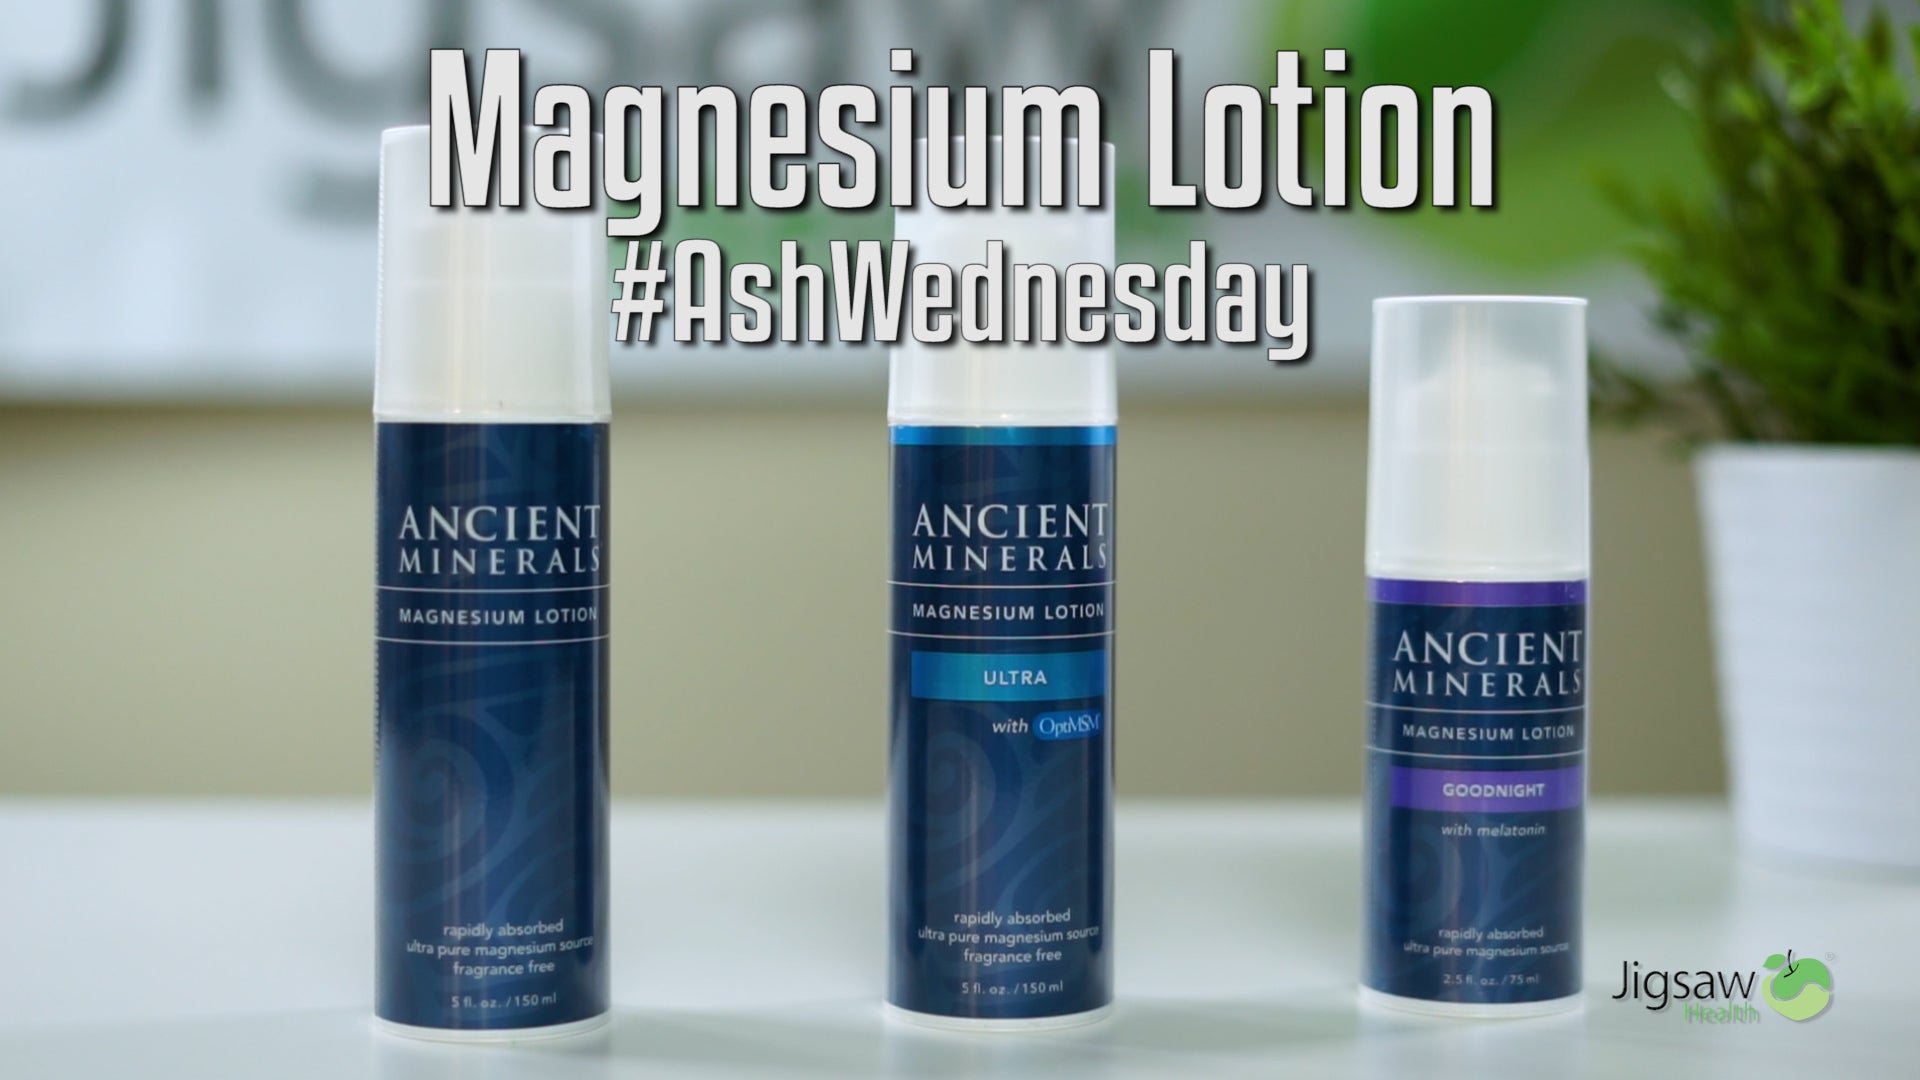 Ancient Minerals Magnesium Lotion Comparison | #AshWednesday